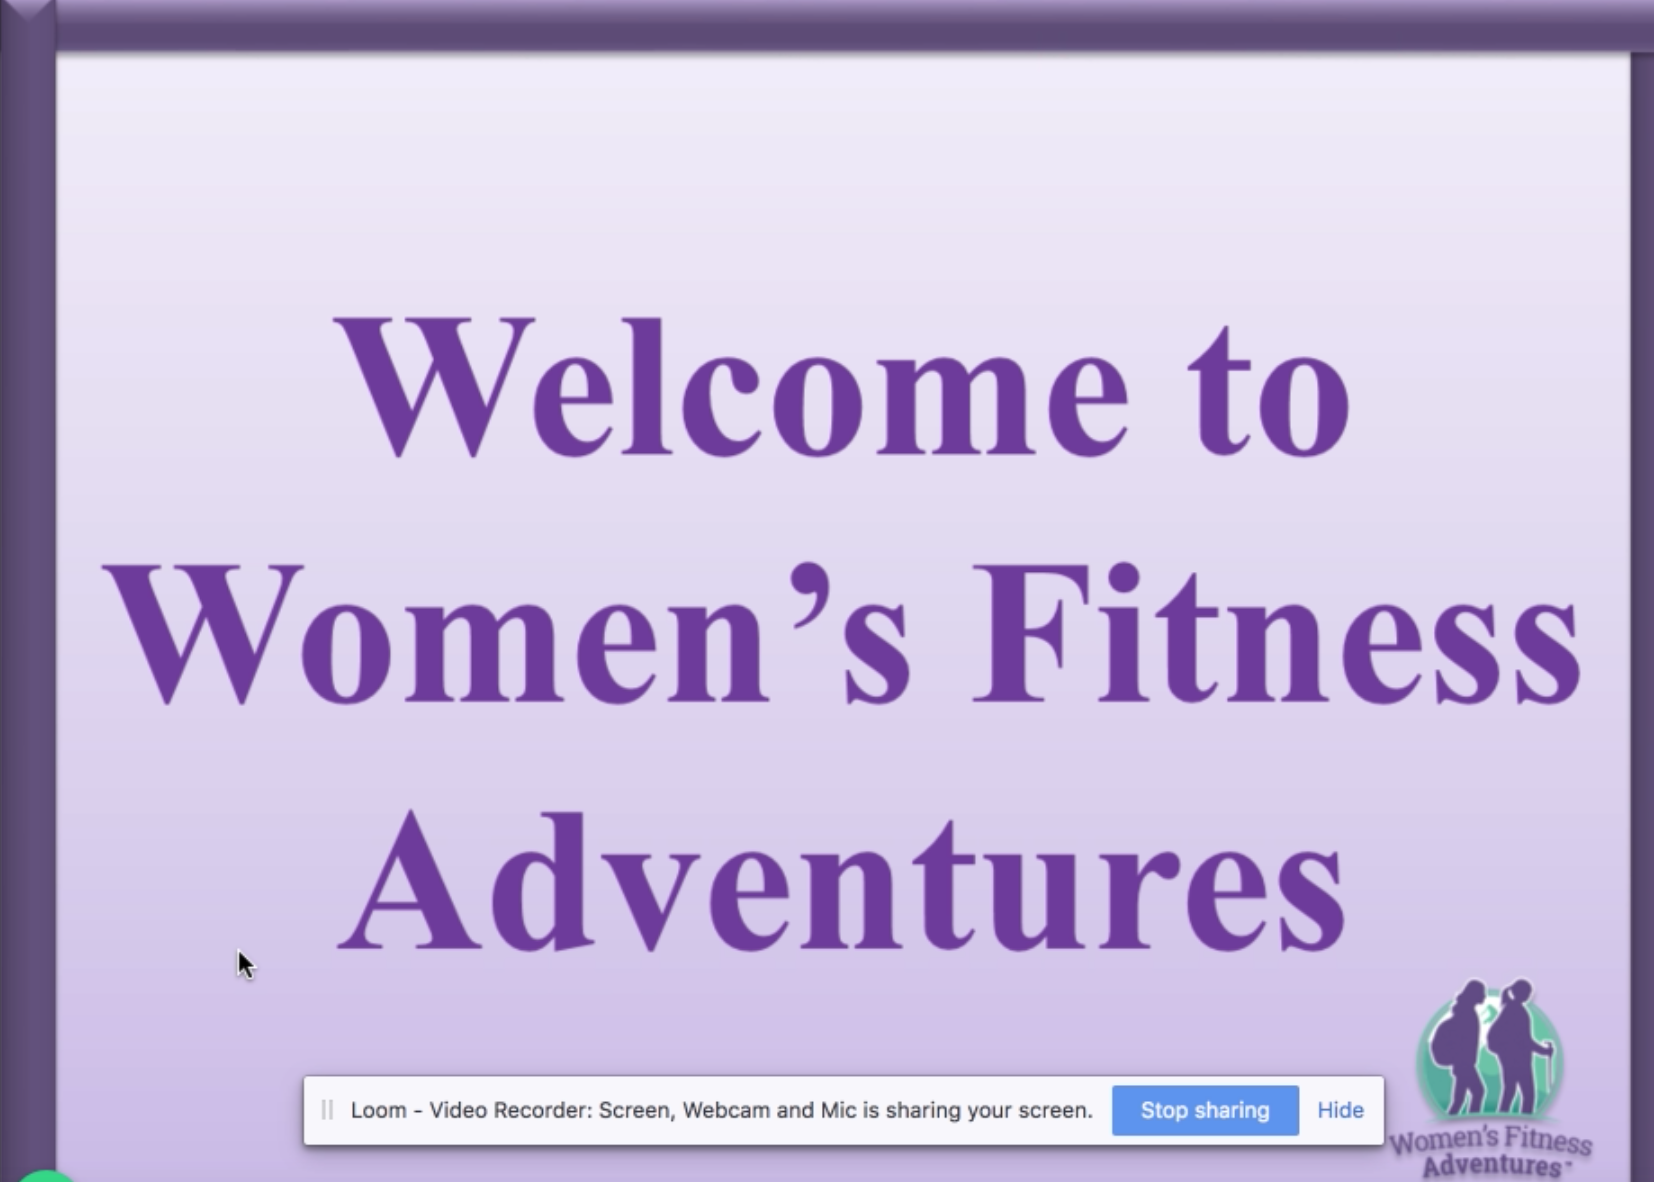 Welcome to Women's Fitness Adventures